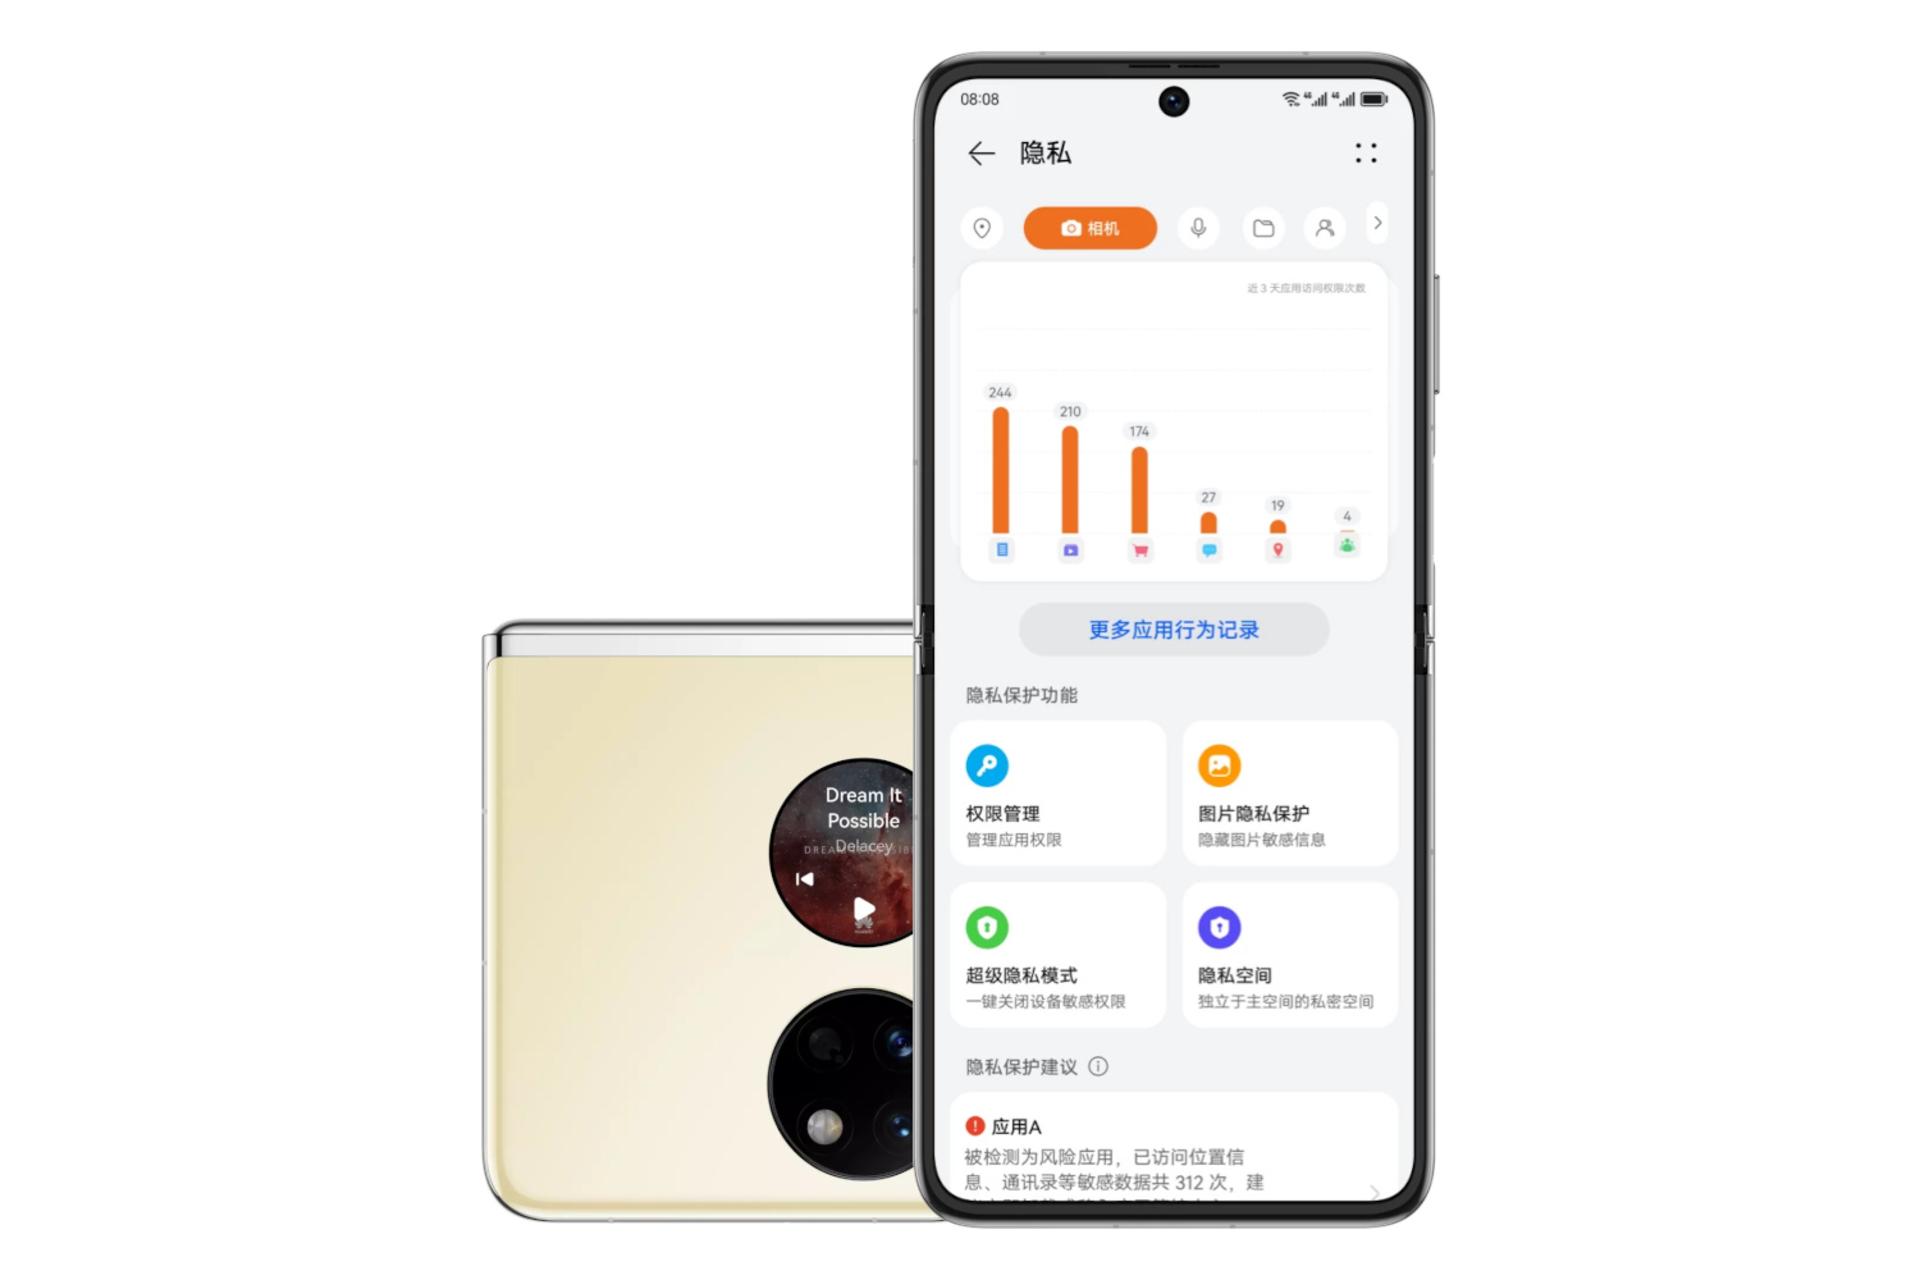 گوشی موبایل پاکت اس هواوی / Huawei Pocket S طلایی